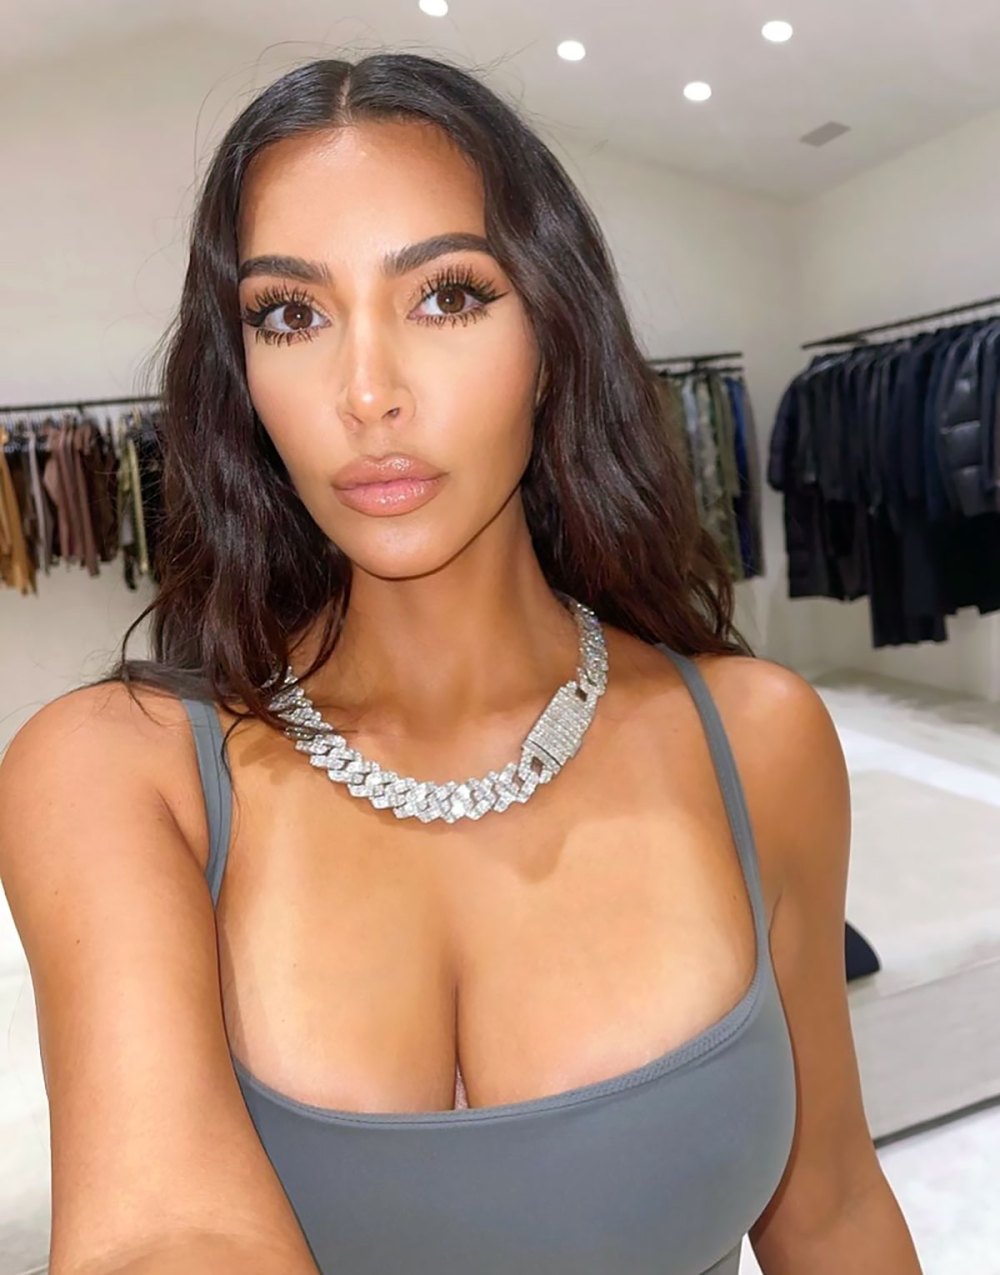 Kim Kardashian’s Hindu Earrings Spark Cultural Appropriation Backlash